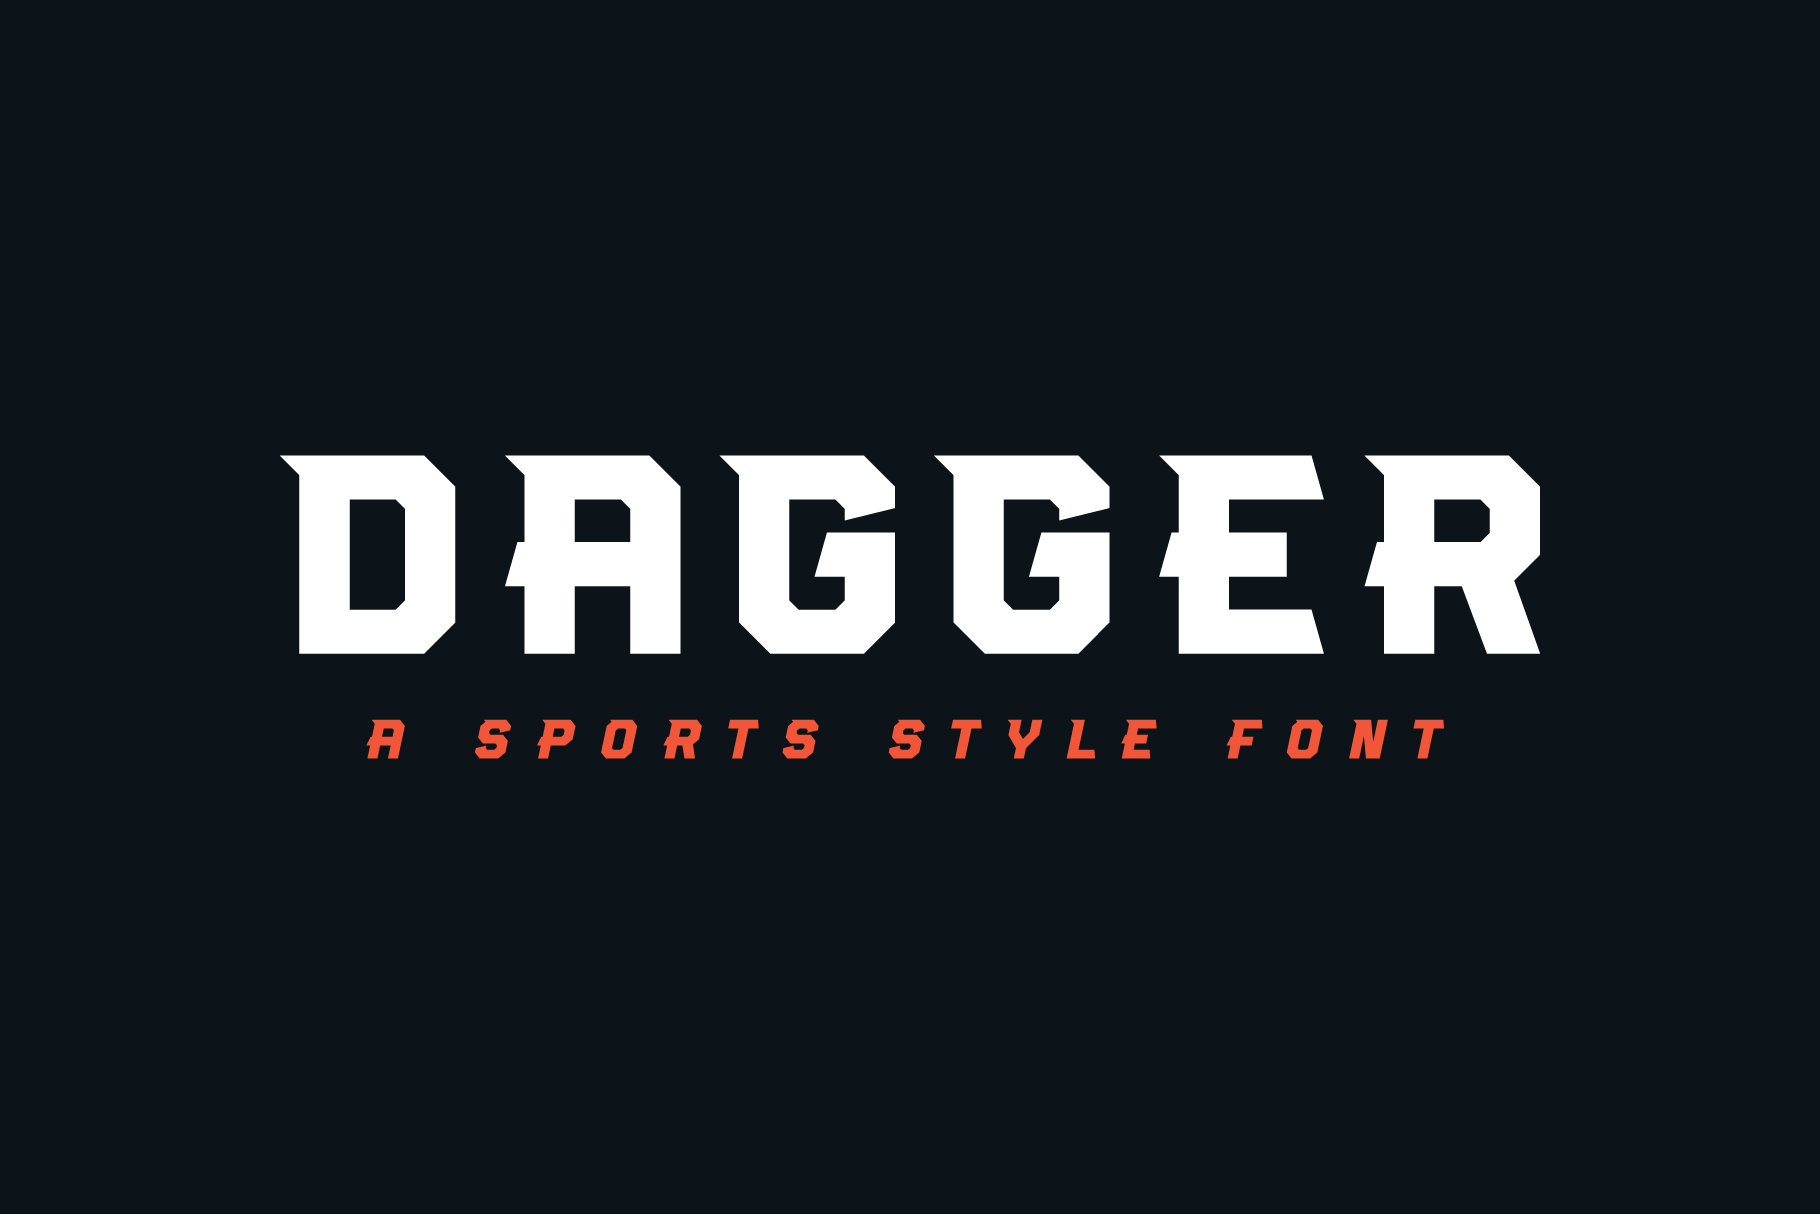 Dagger cover image.